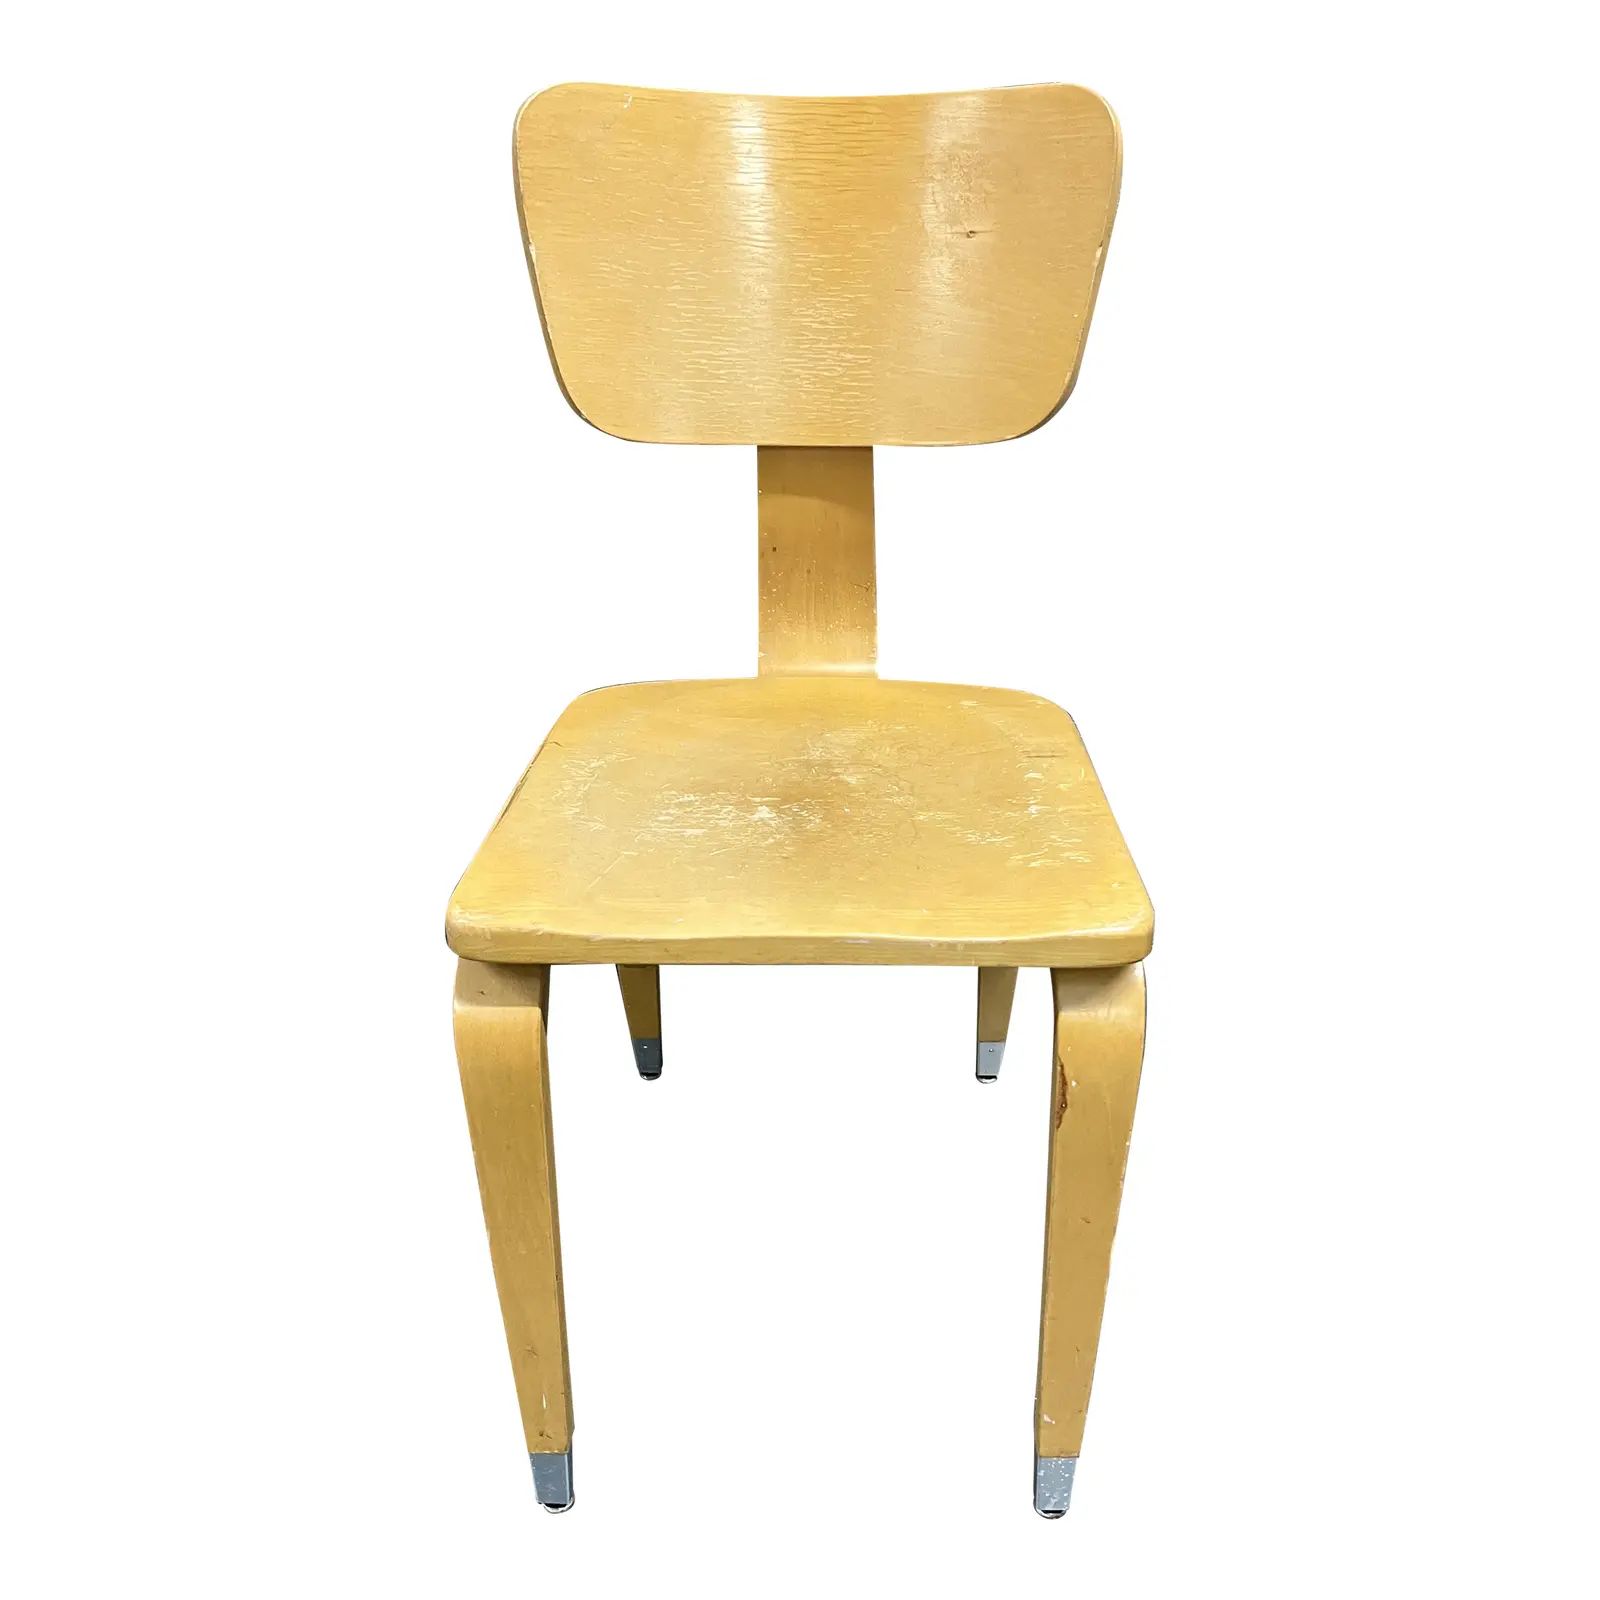 Mid Century Modern Bent Plywood Chair by Thonet | Chairish